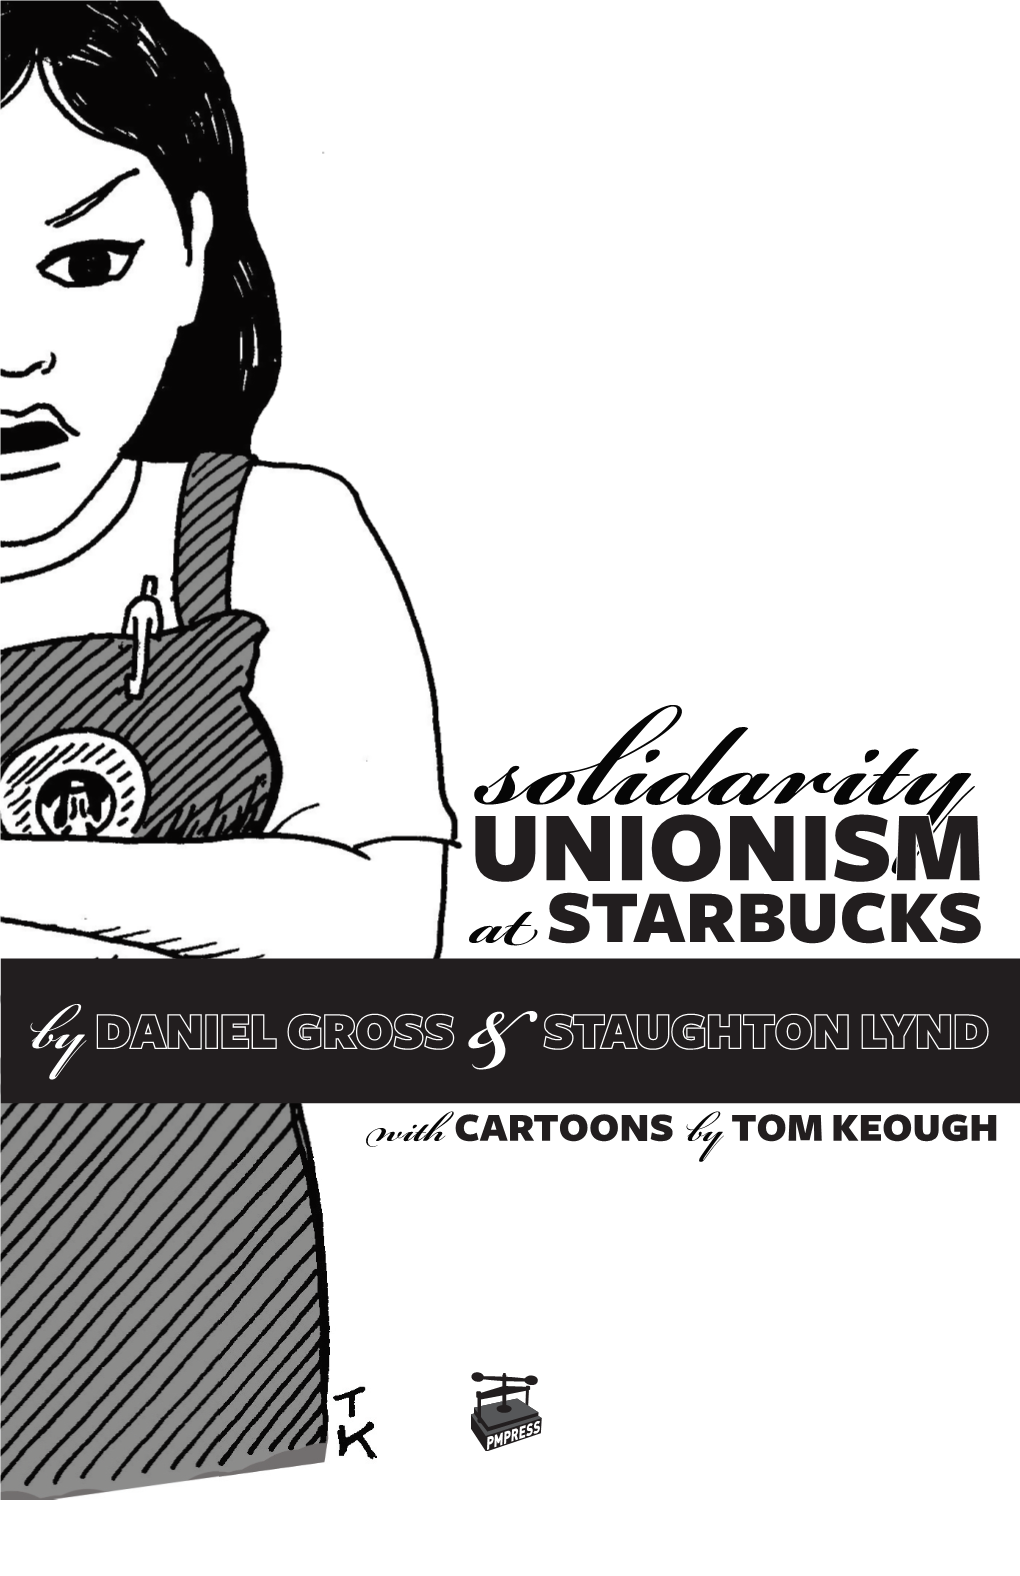 SOLIDARITY UNIONISM at STARBUCKS by Daniel Gross & Staughton Lund